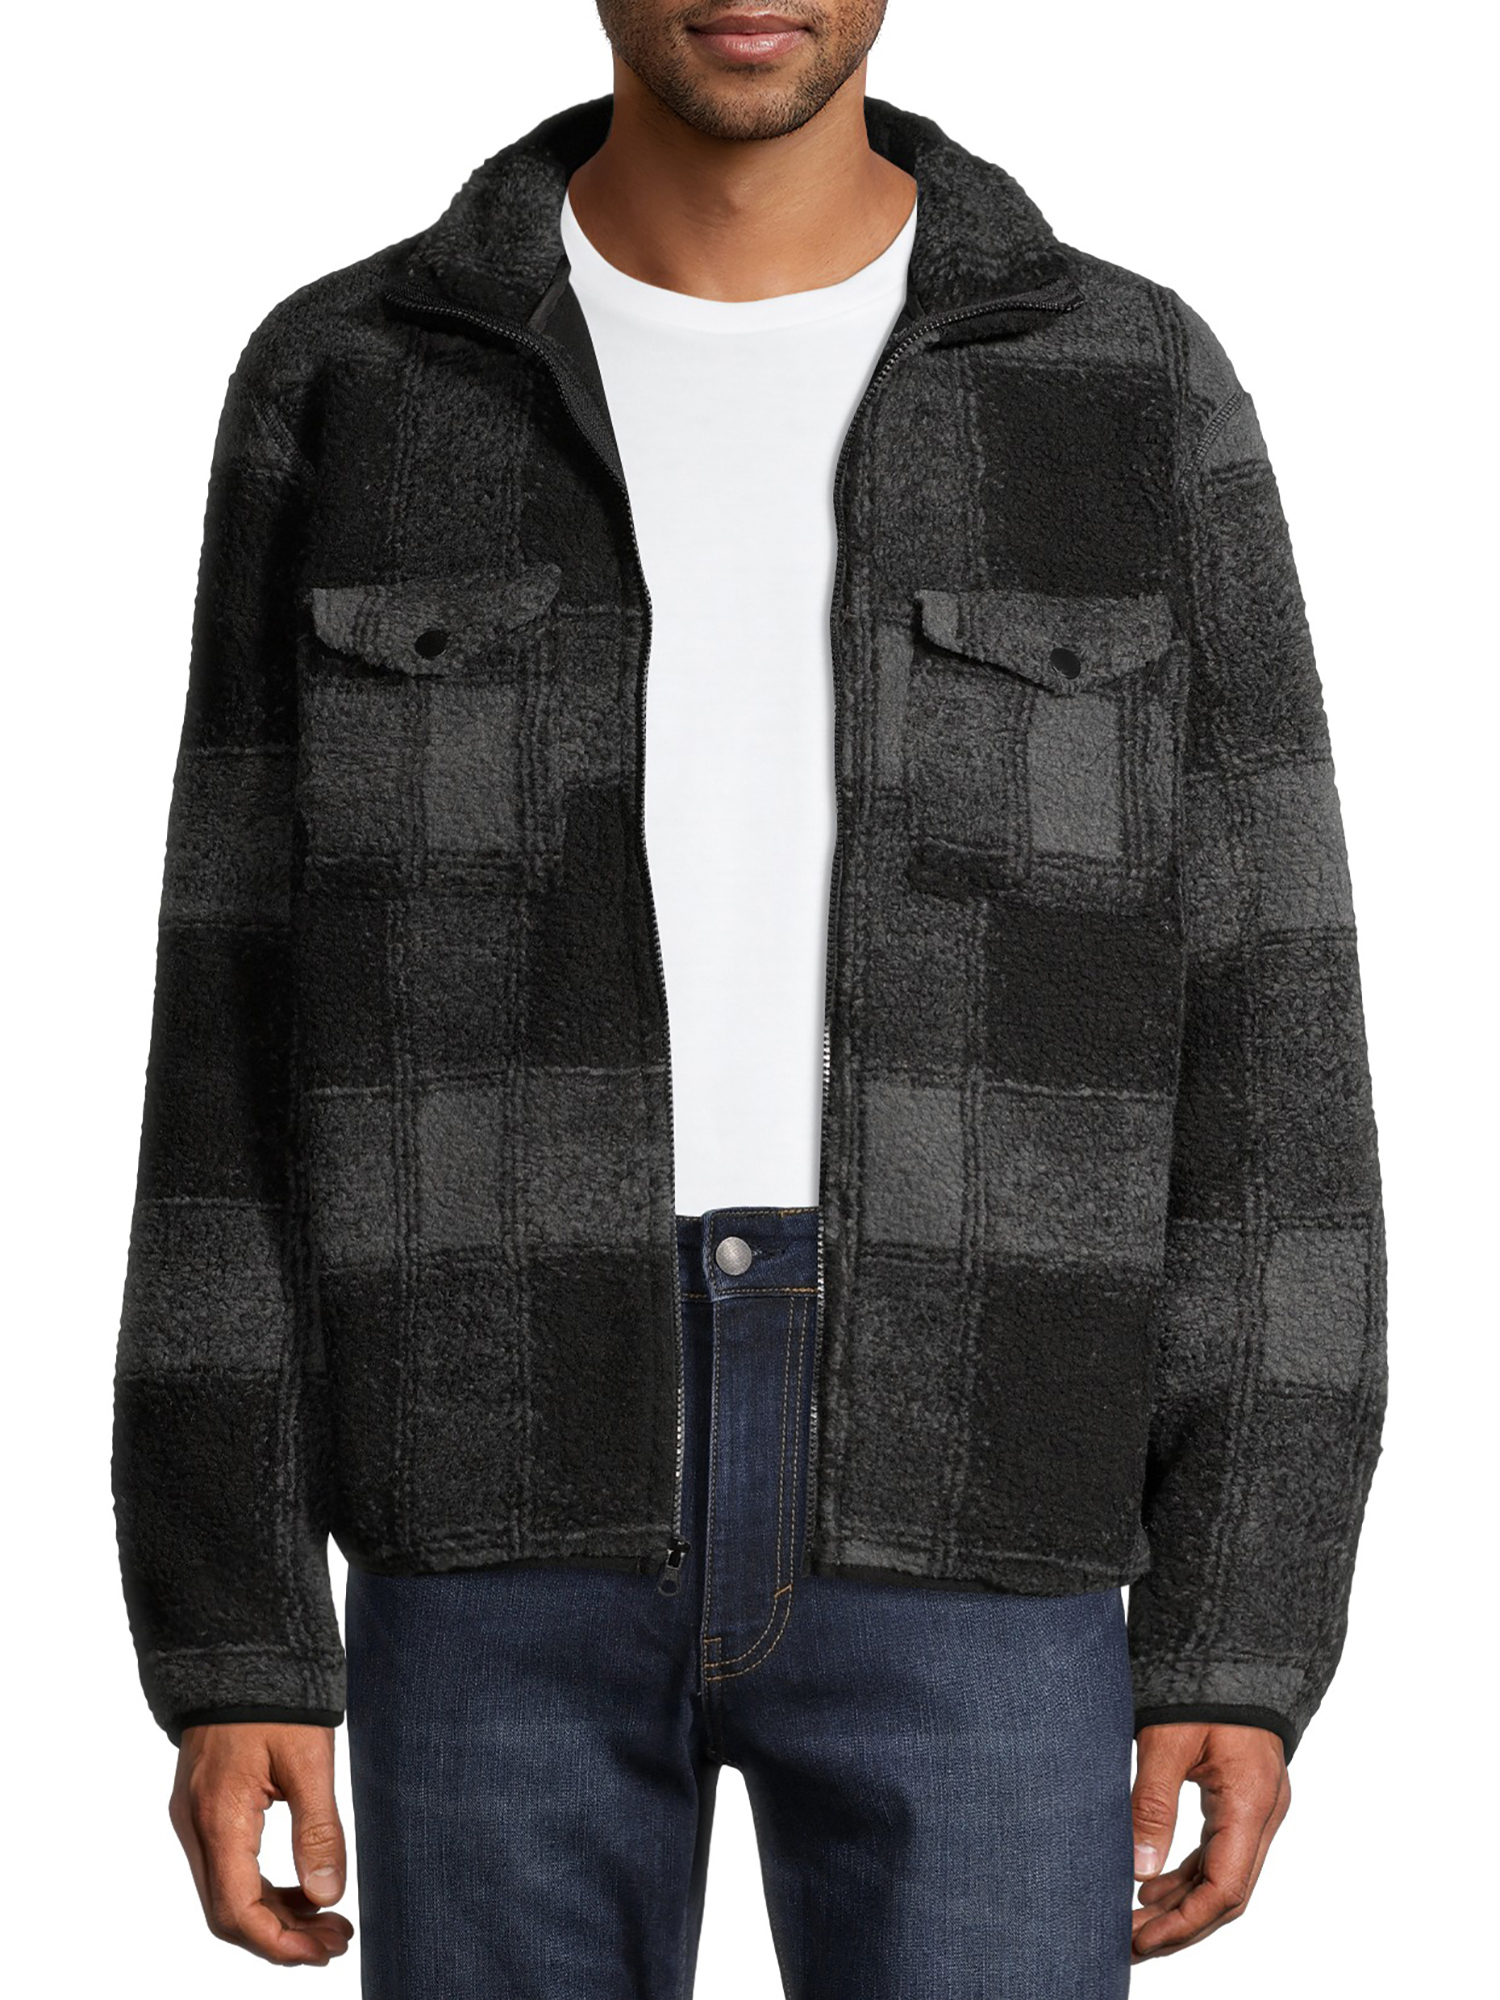 I5 Apparel Men's Buffalo Plaid Full Zip Sherpa Jacket, Sizes M-XXL - image 1 of 6